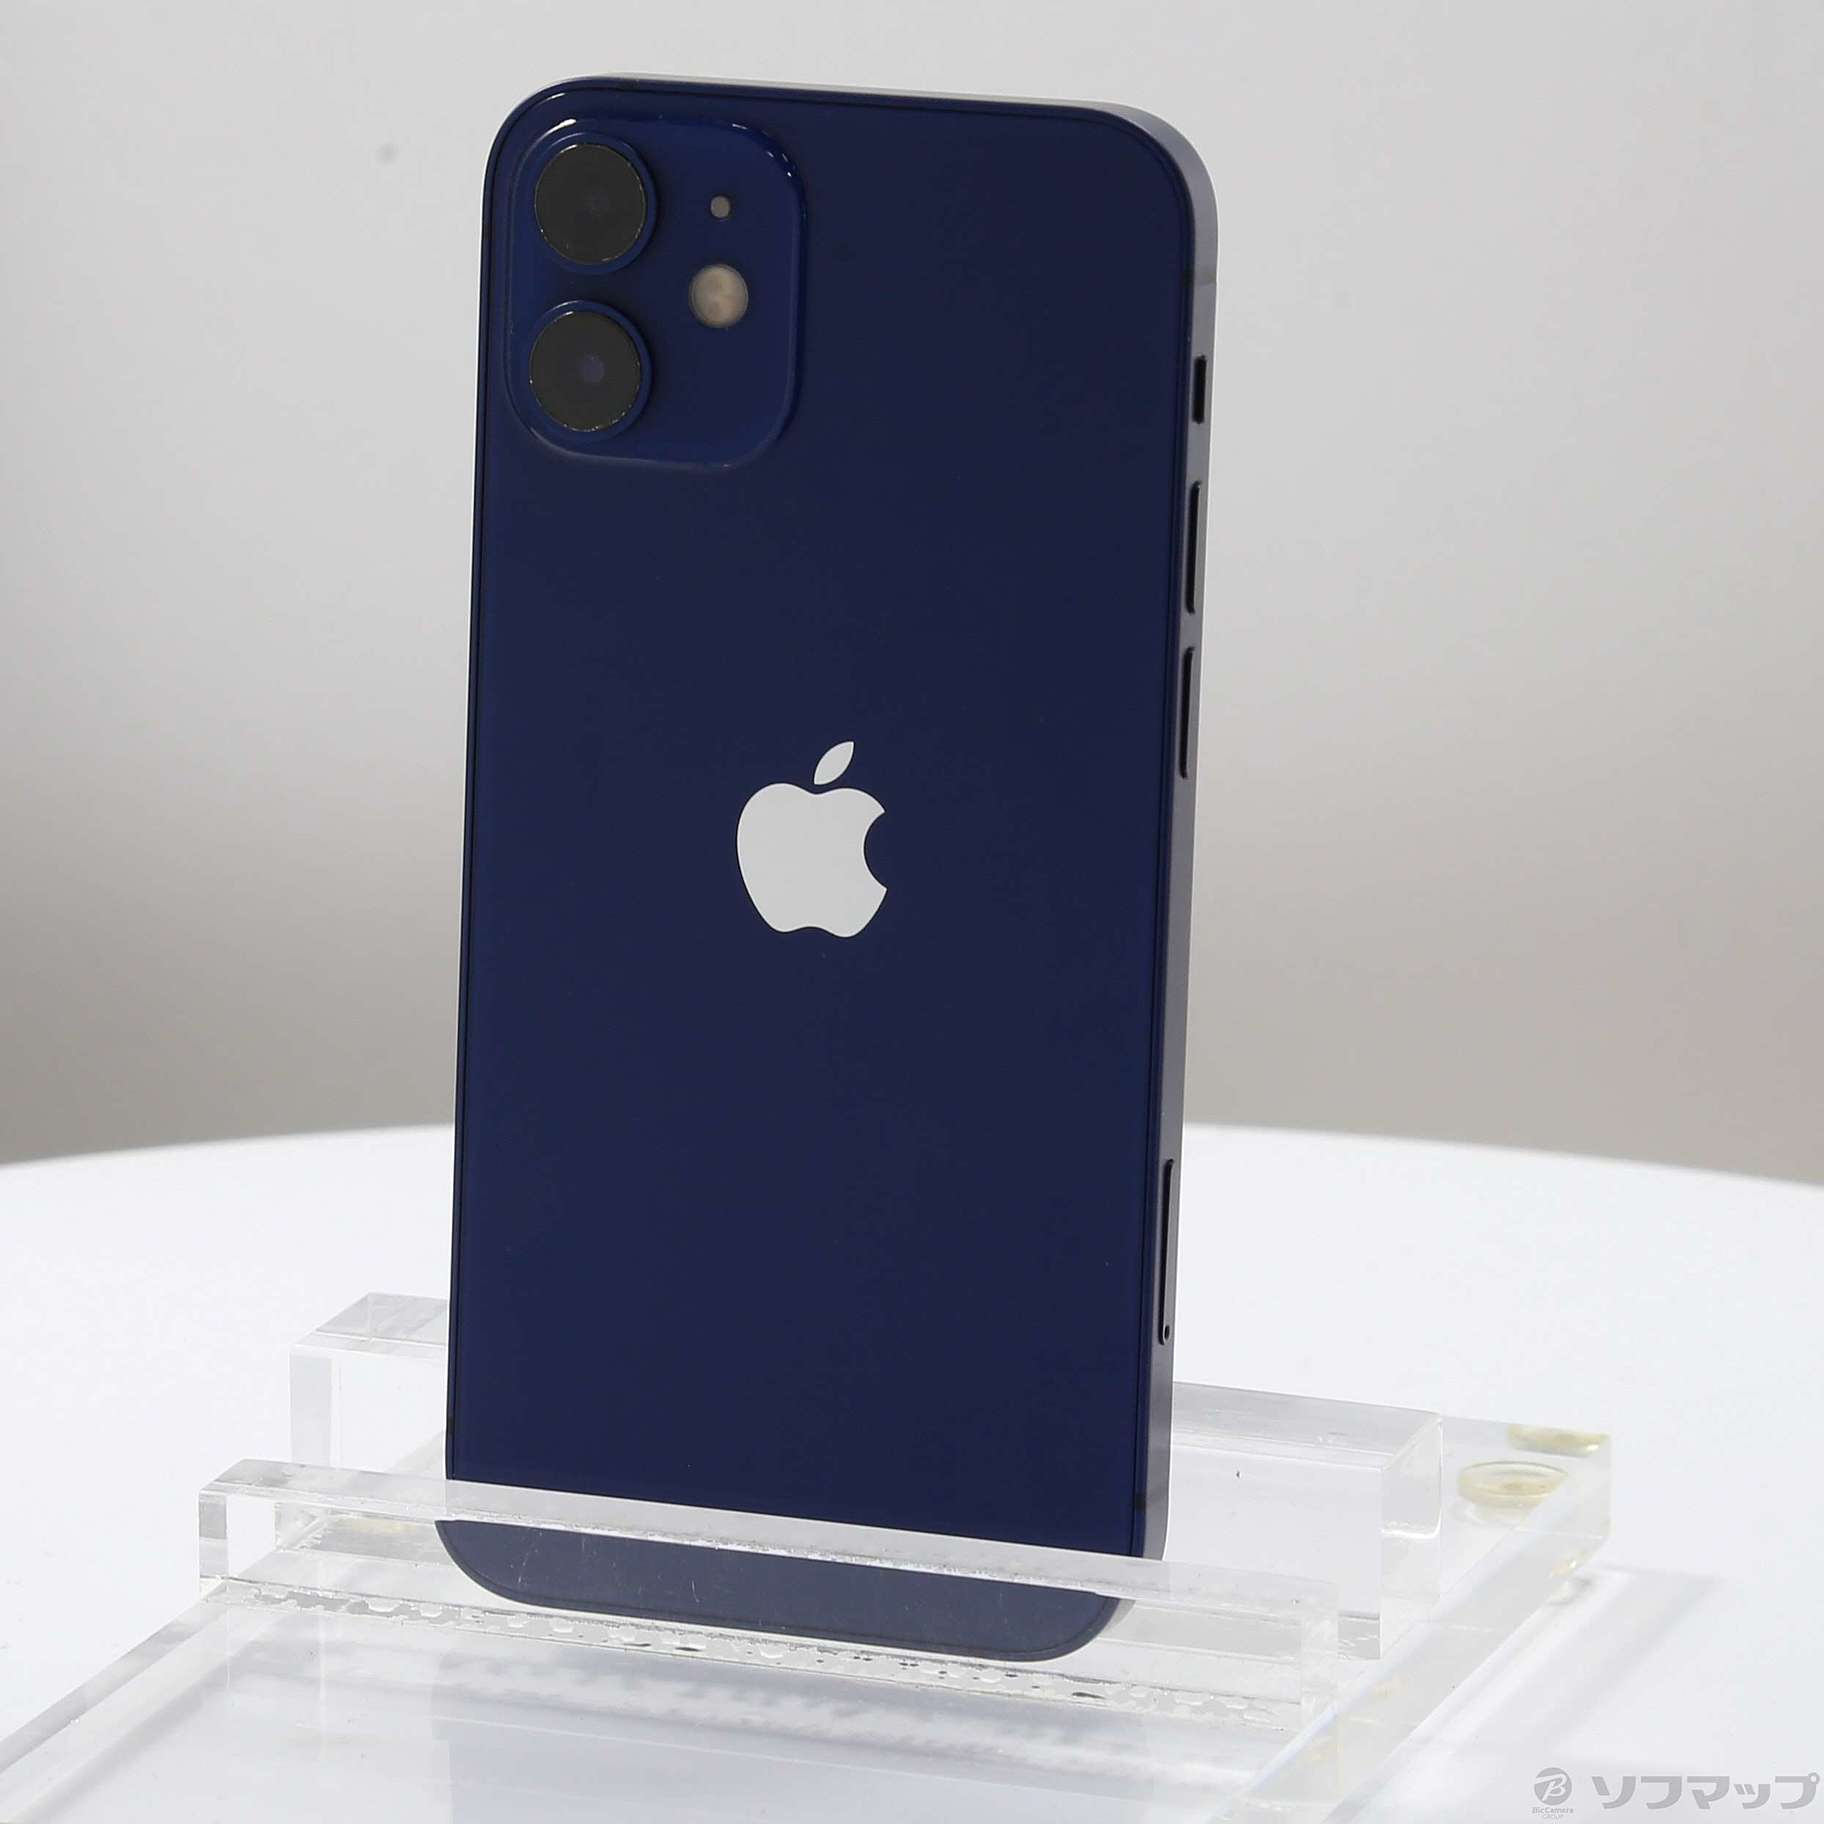 iPhone 12 mini 128GB SIMフリー [ブルー] 中古(白ロム)価格比較 ...